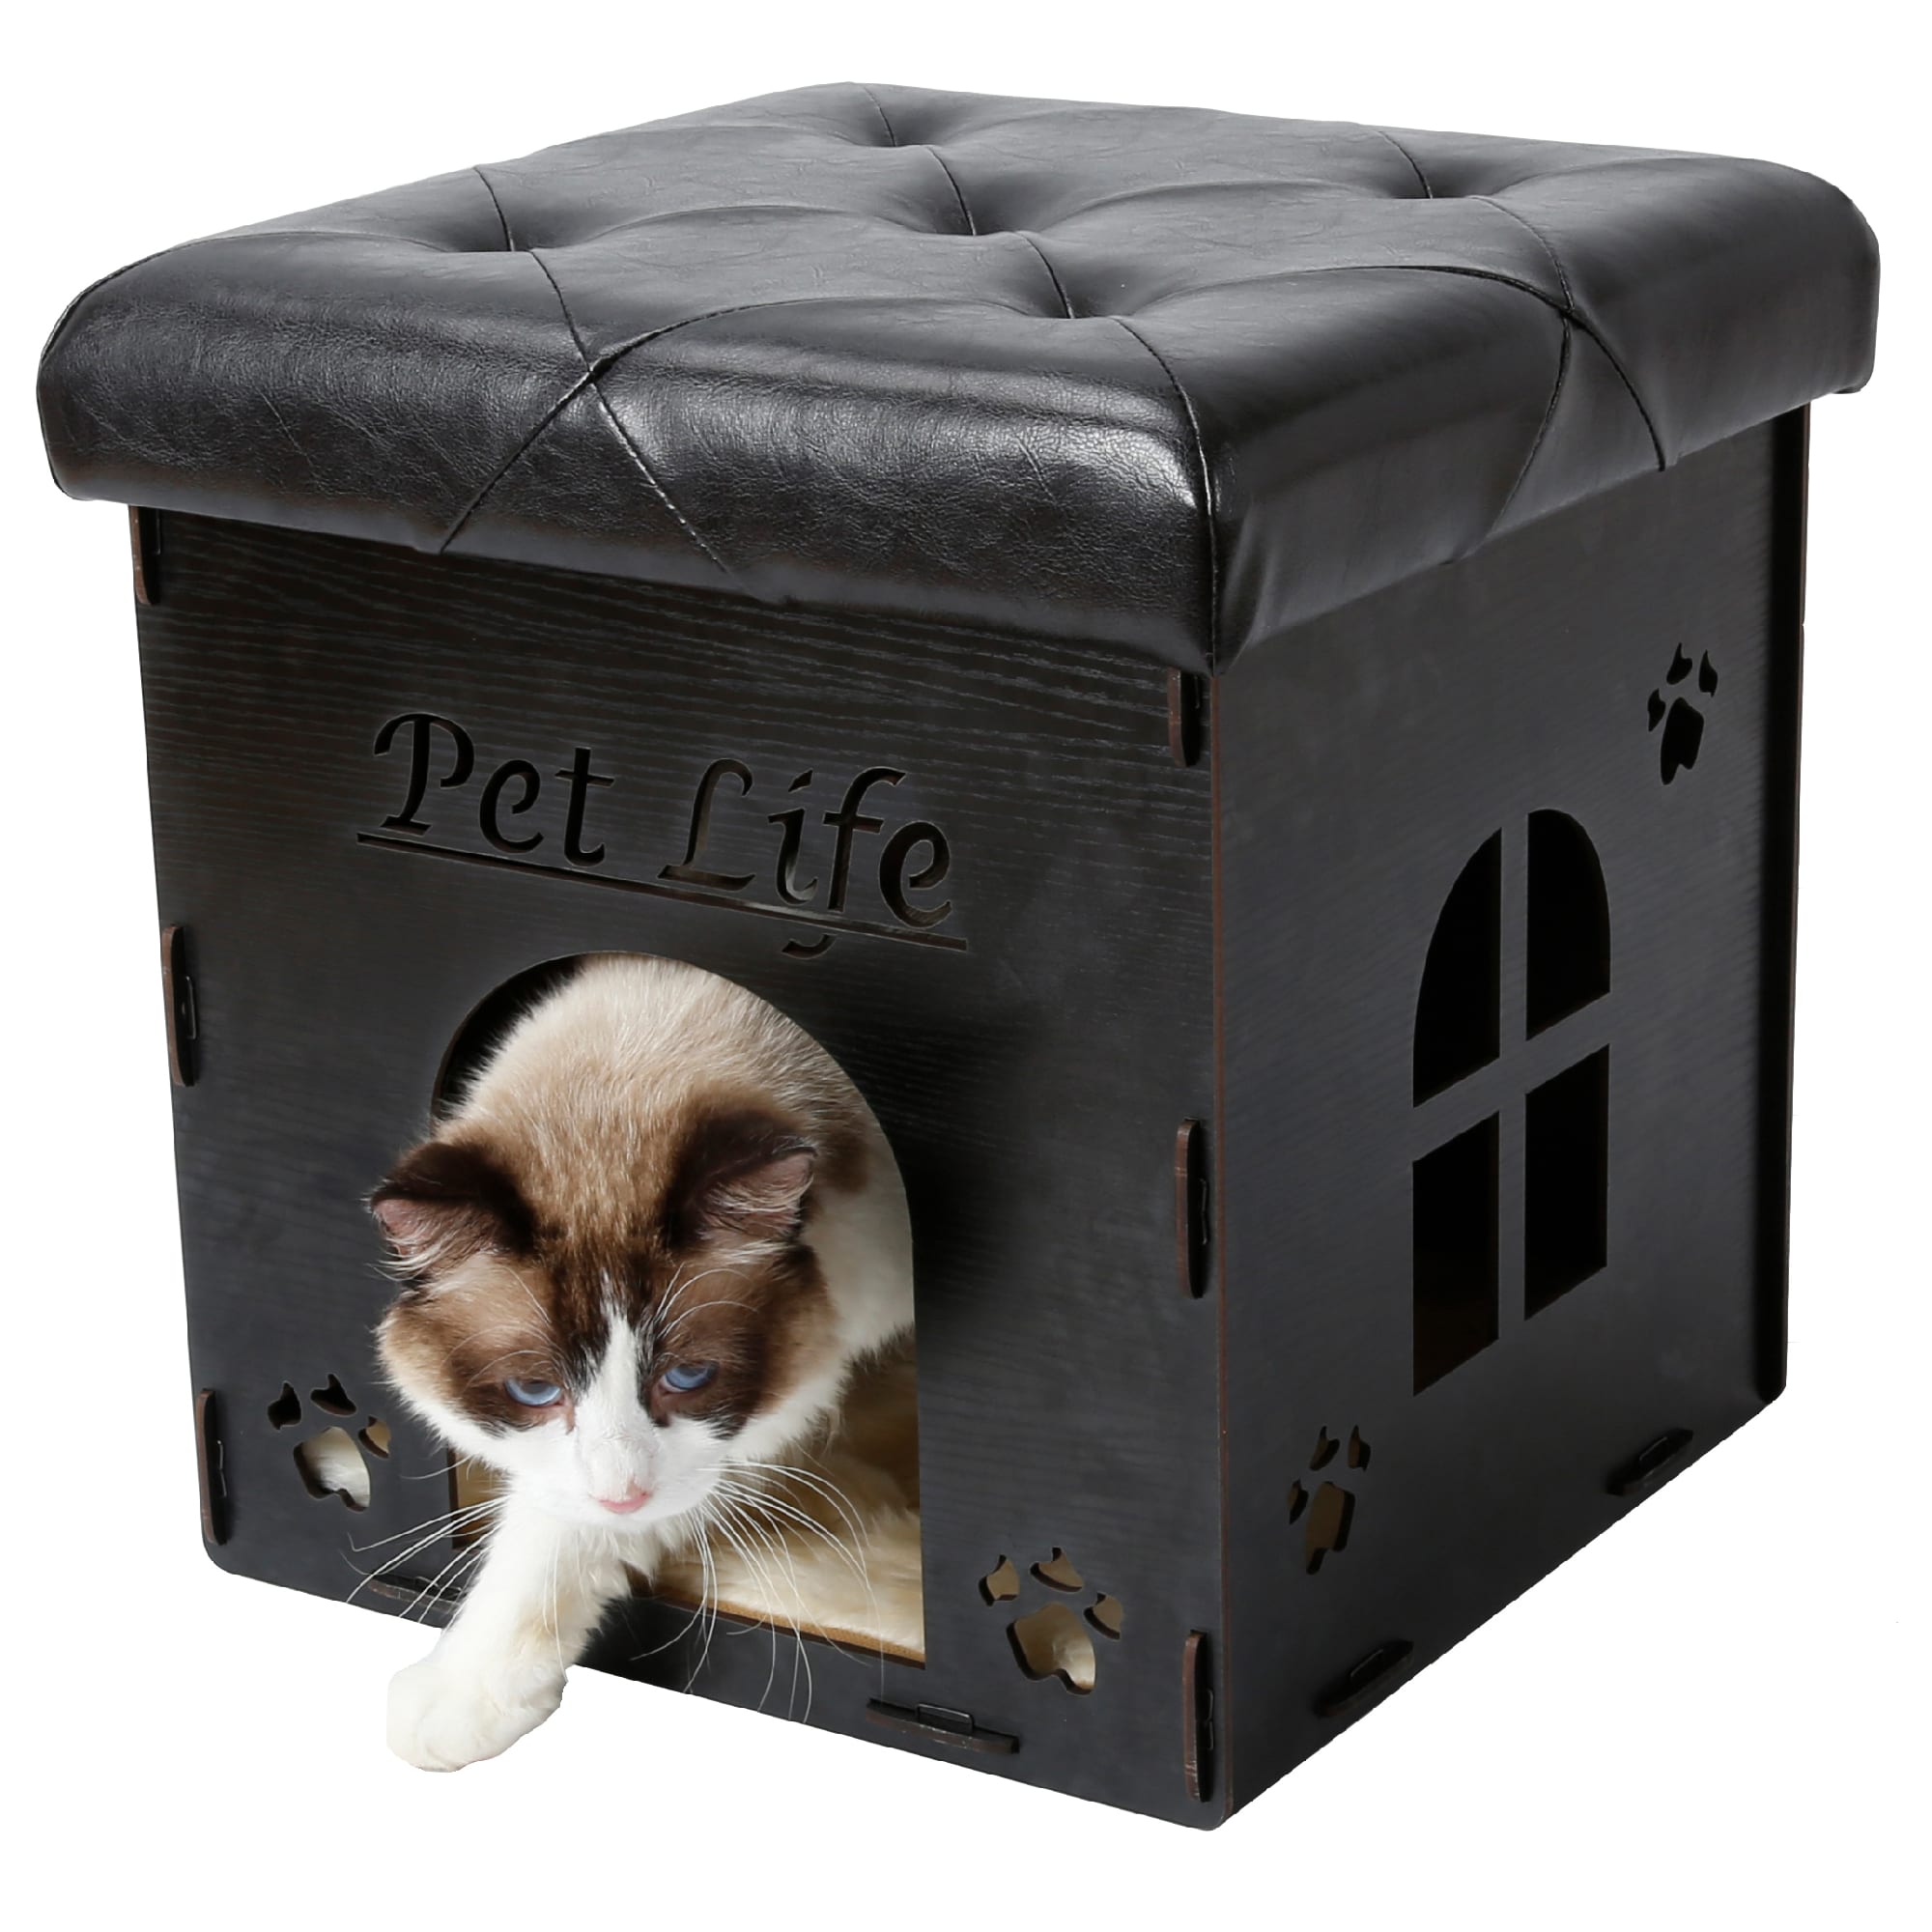 Photos - Cat Bed / House Pet Life Black Foldaway Collapsible Designer Cat House Furniture 